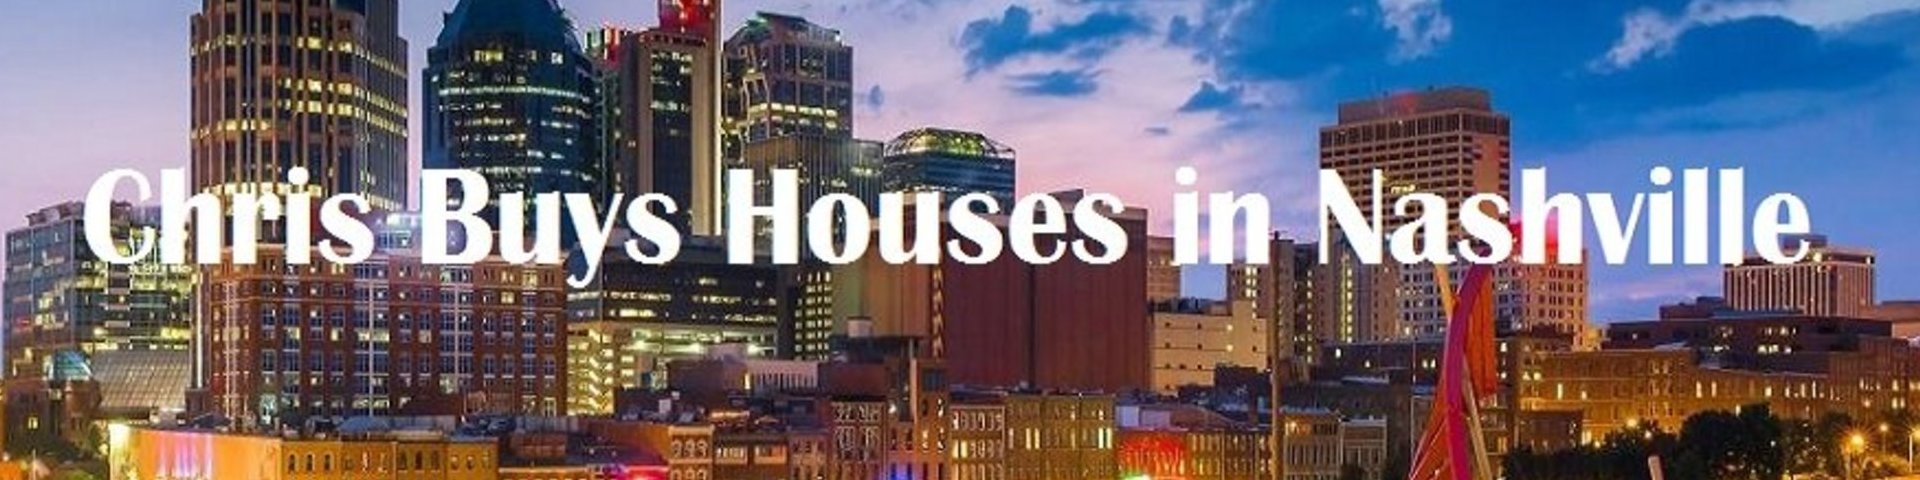 Chris Buys Houses in Nashville